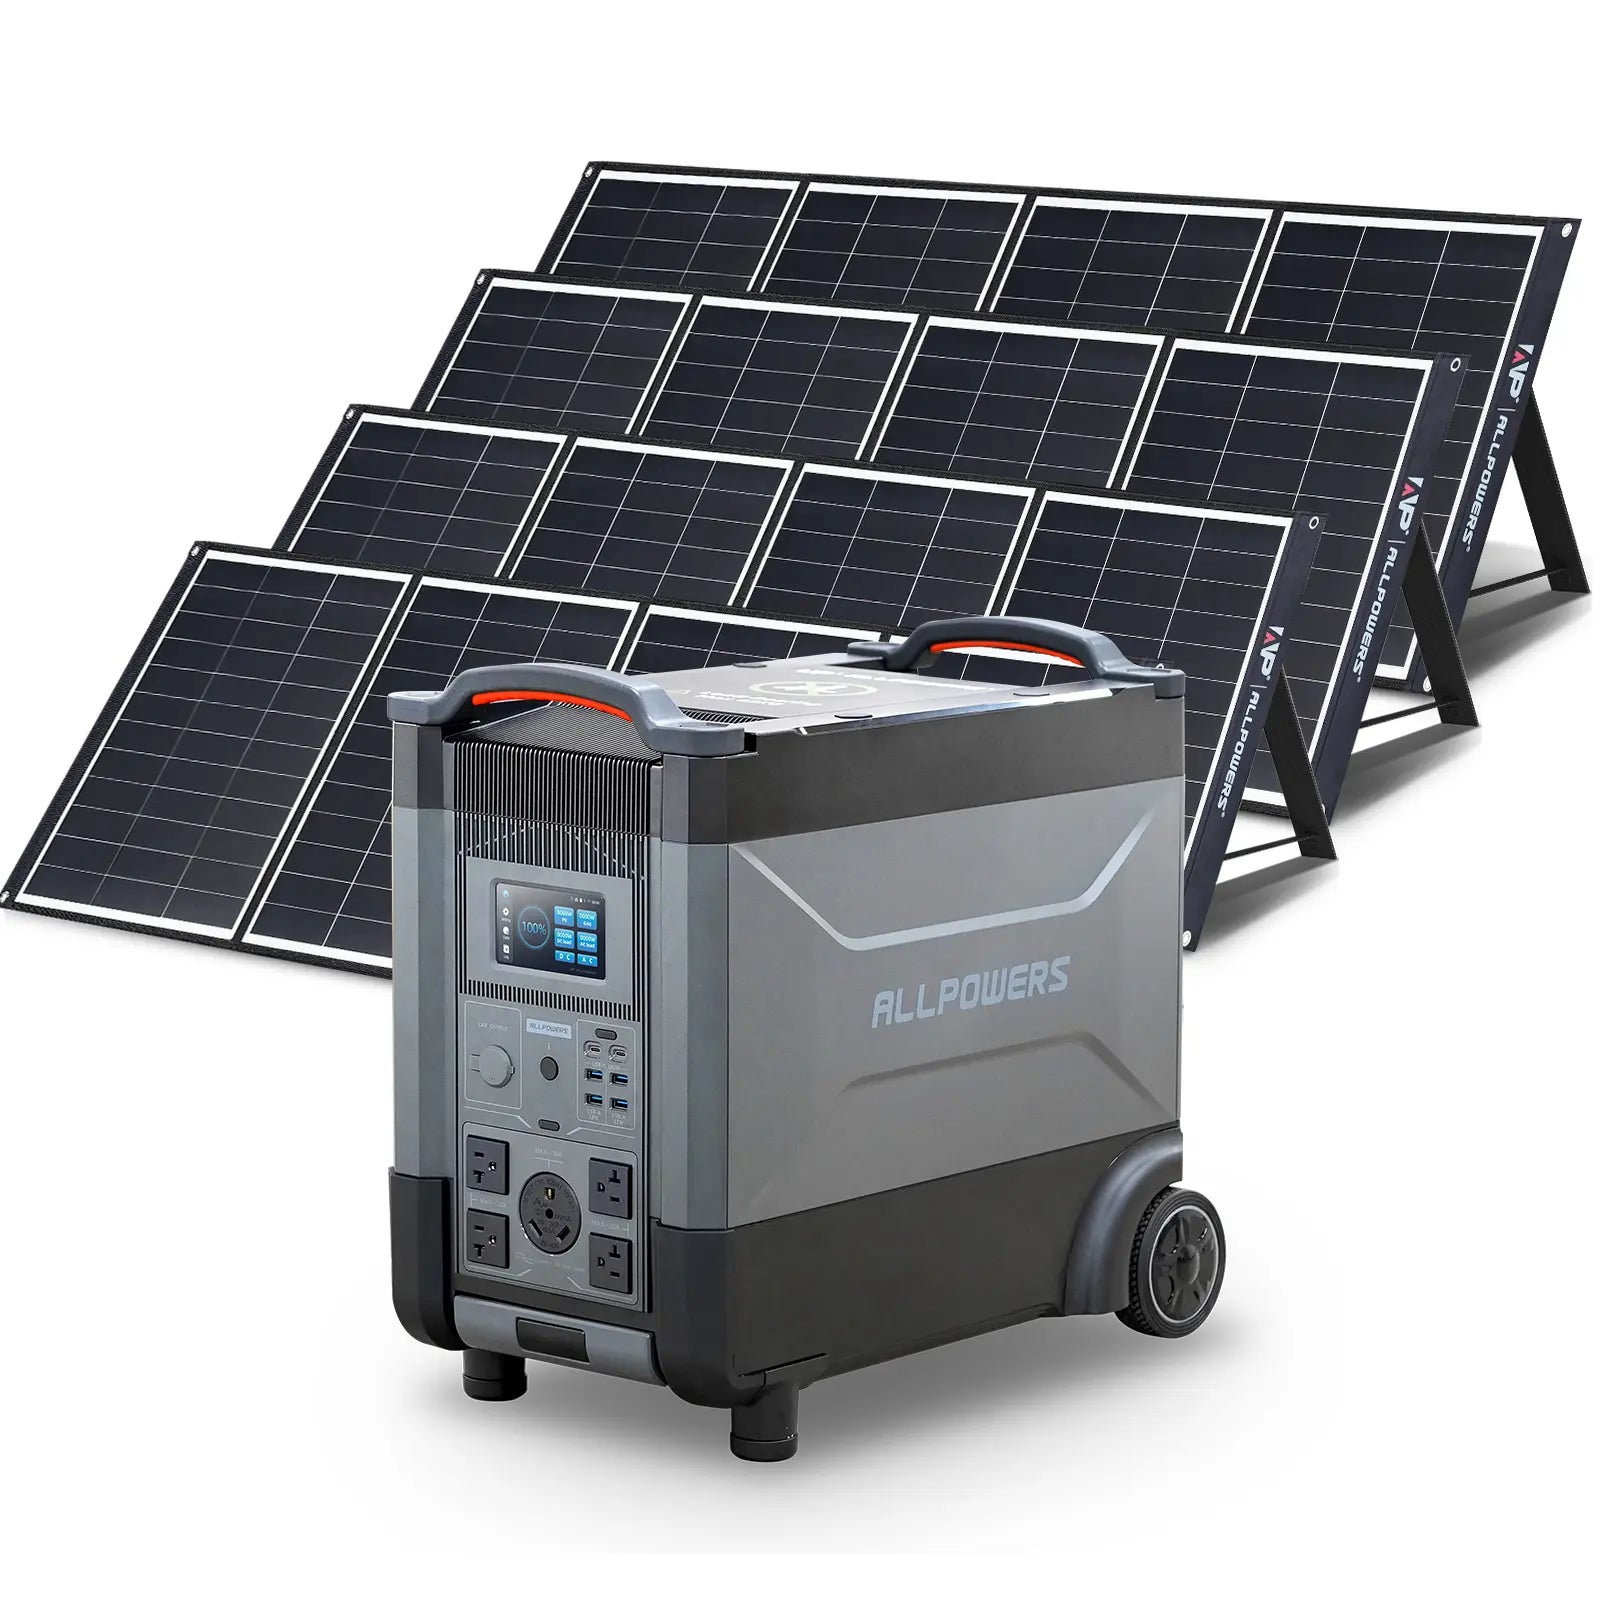 ALLPOWERS Solar Generator Kit 4000W (R4000 + 4 x SP035 200W Solar Panel)